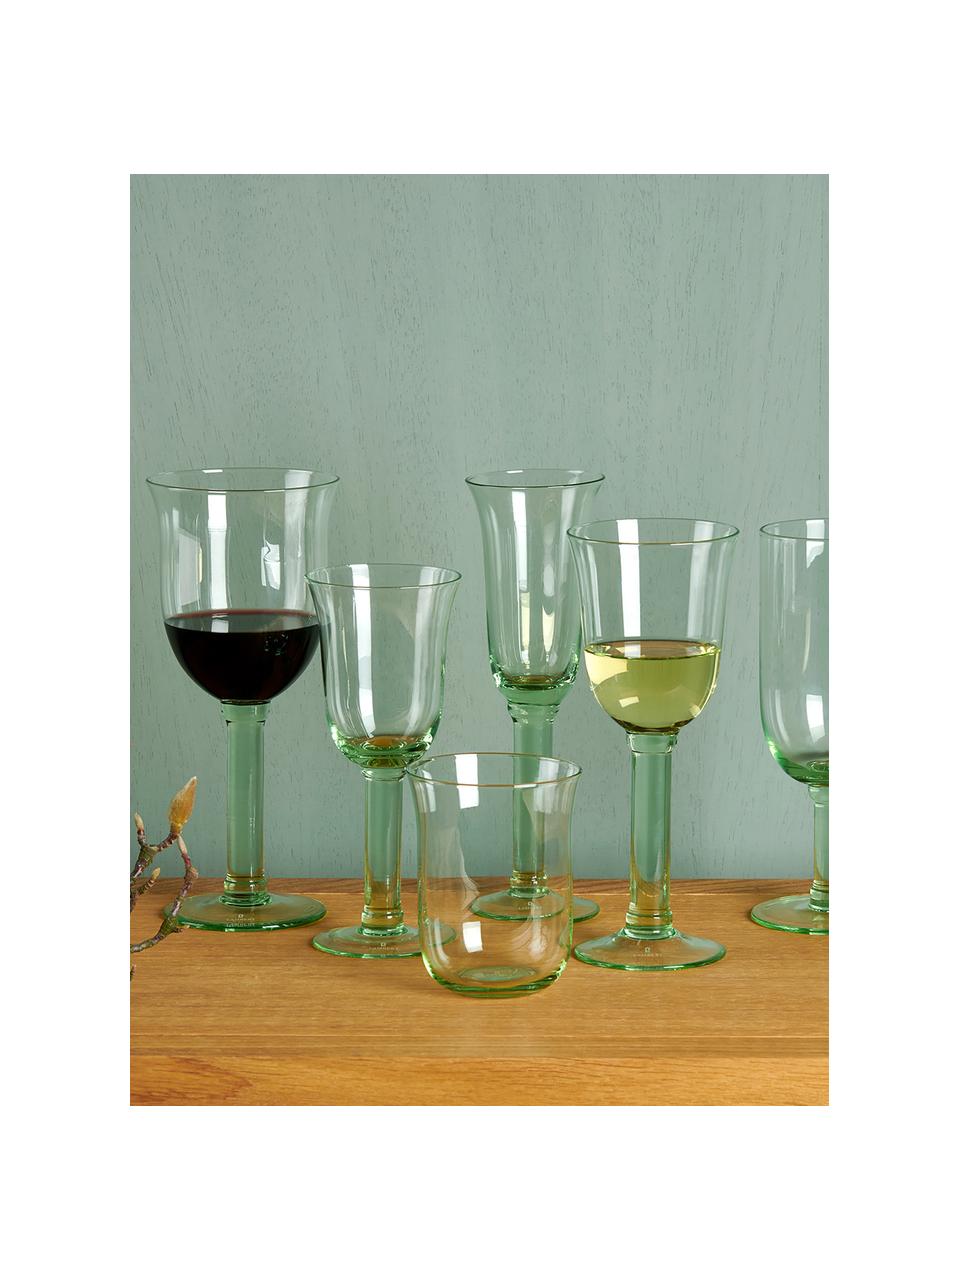 Bicchieri da vino bianco in vetro soffiato Corsica 6 pz, Vetro, Verde chiaro trasparente, Ø 8 x Alt. 19 cm,  350 ml